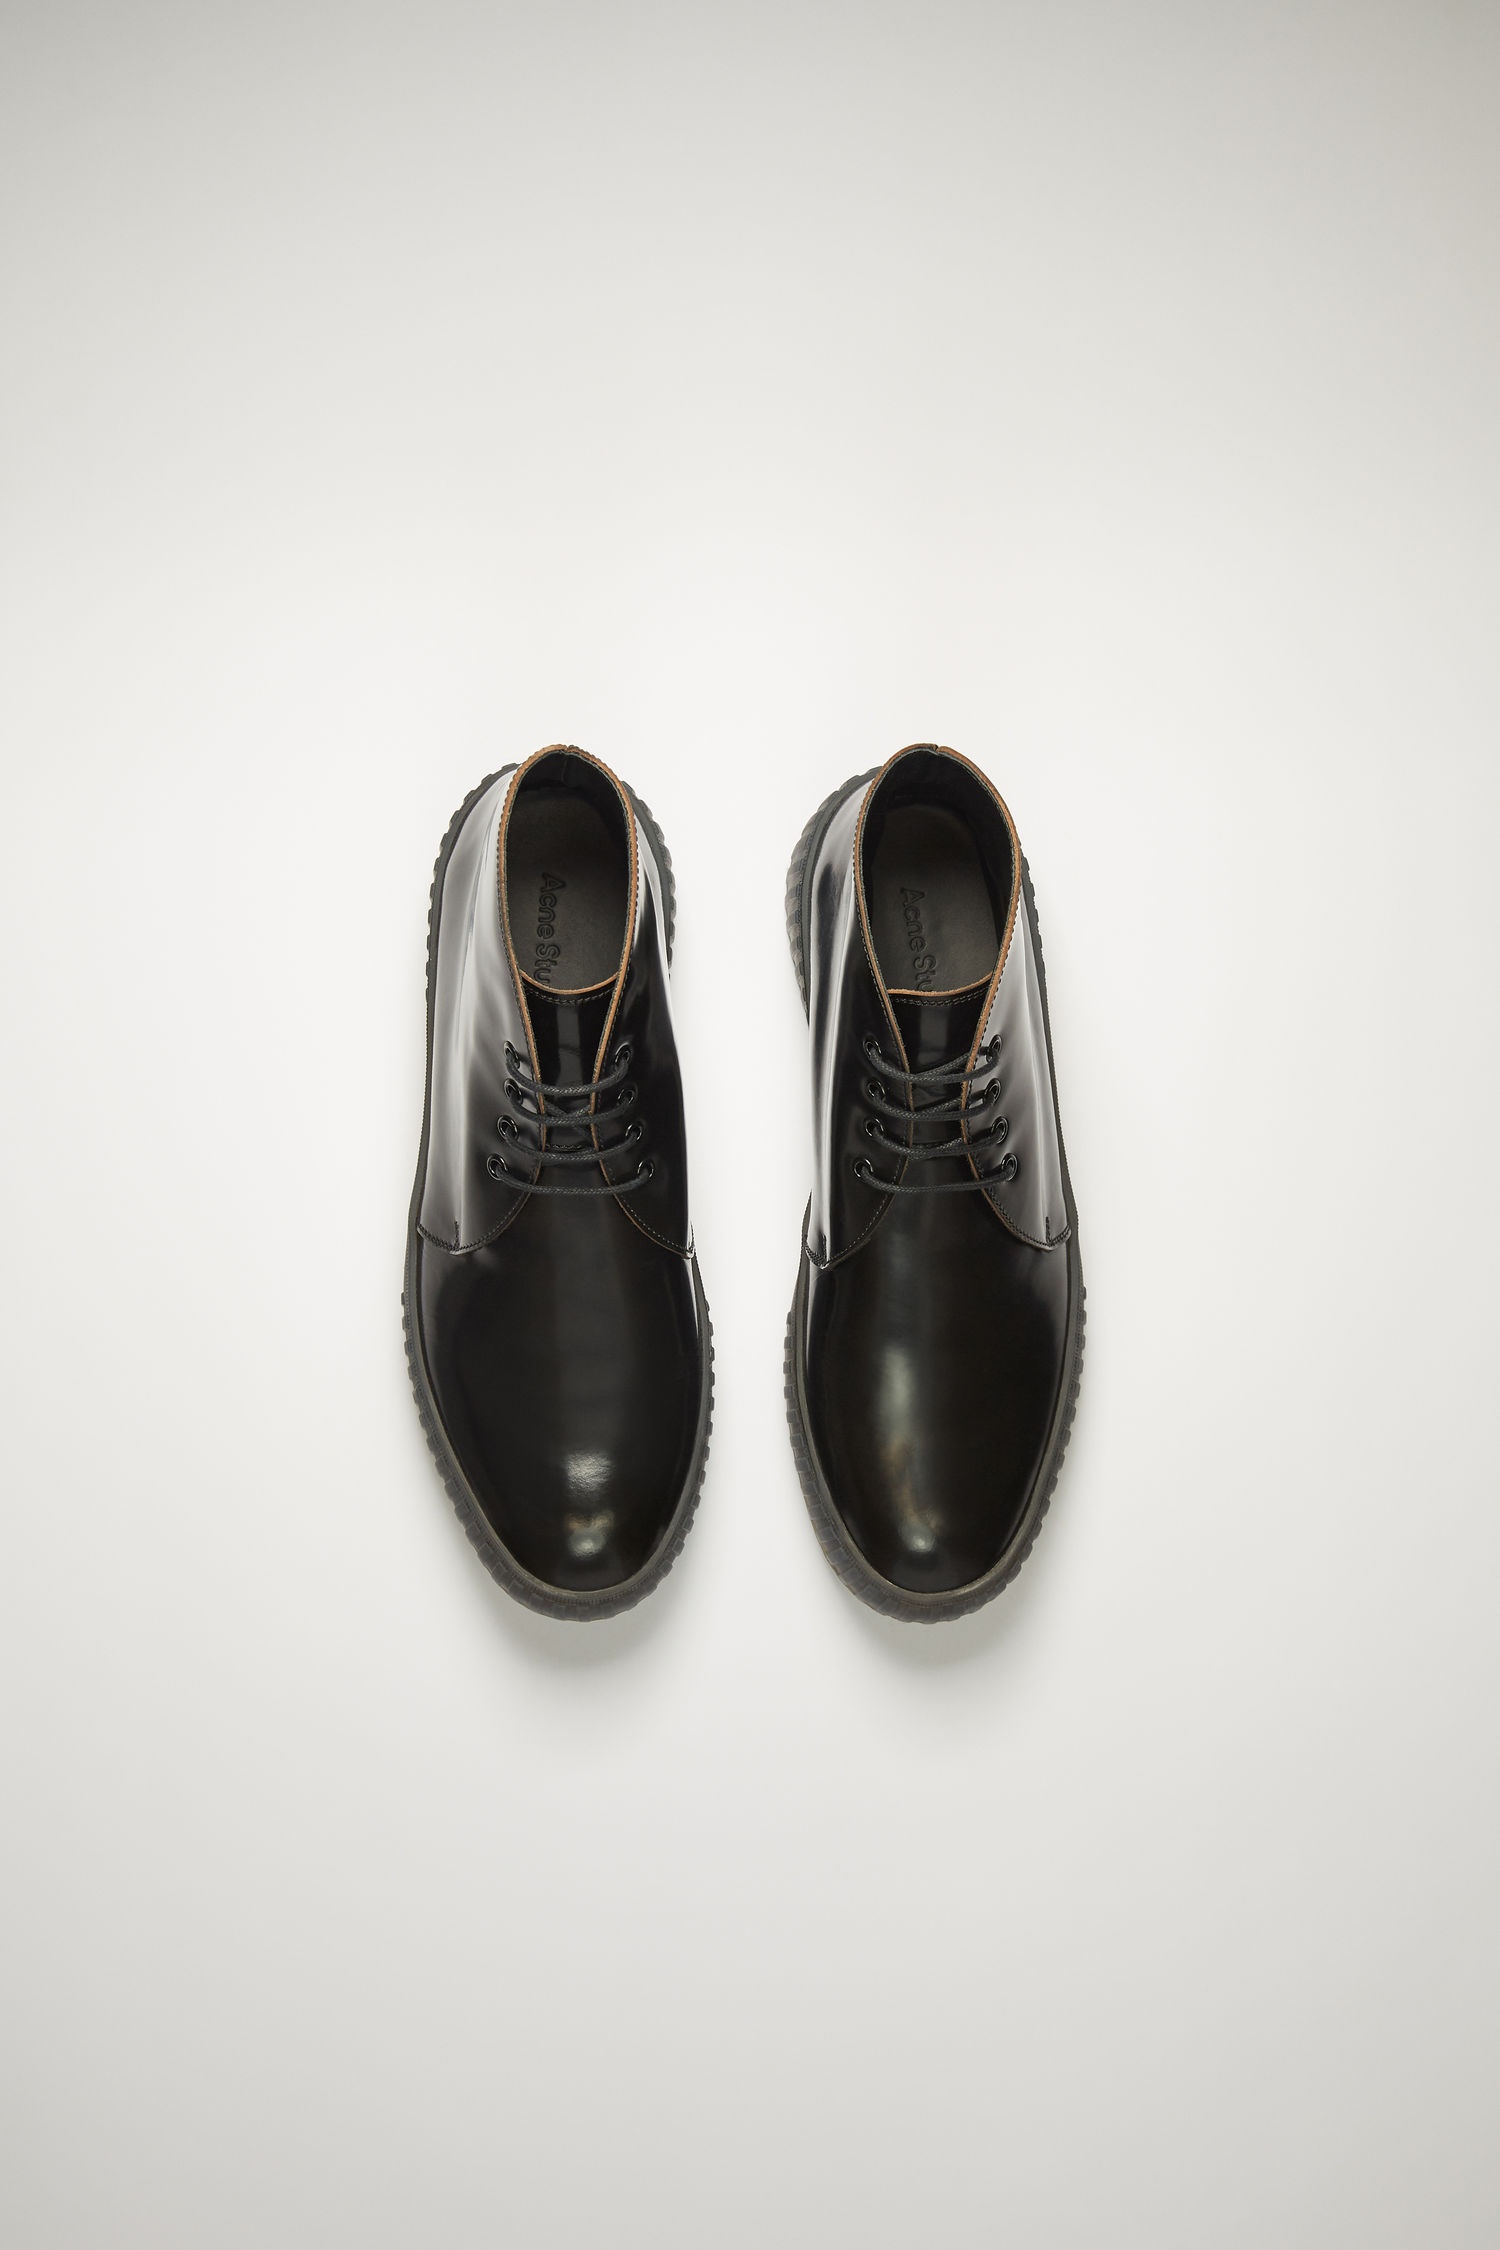 Leather chukka shoes black/grey - 2